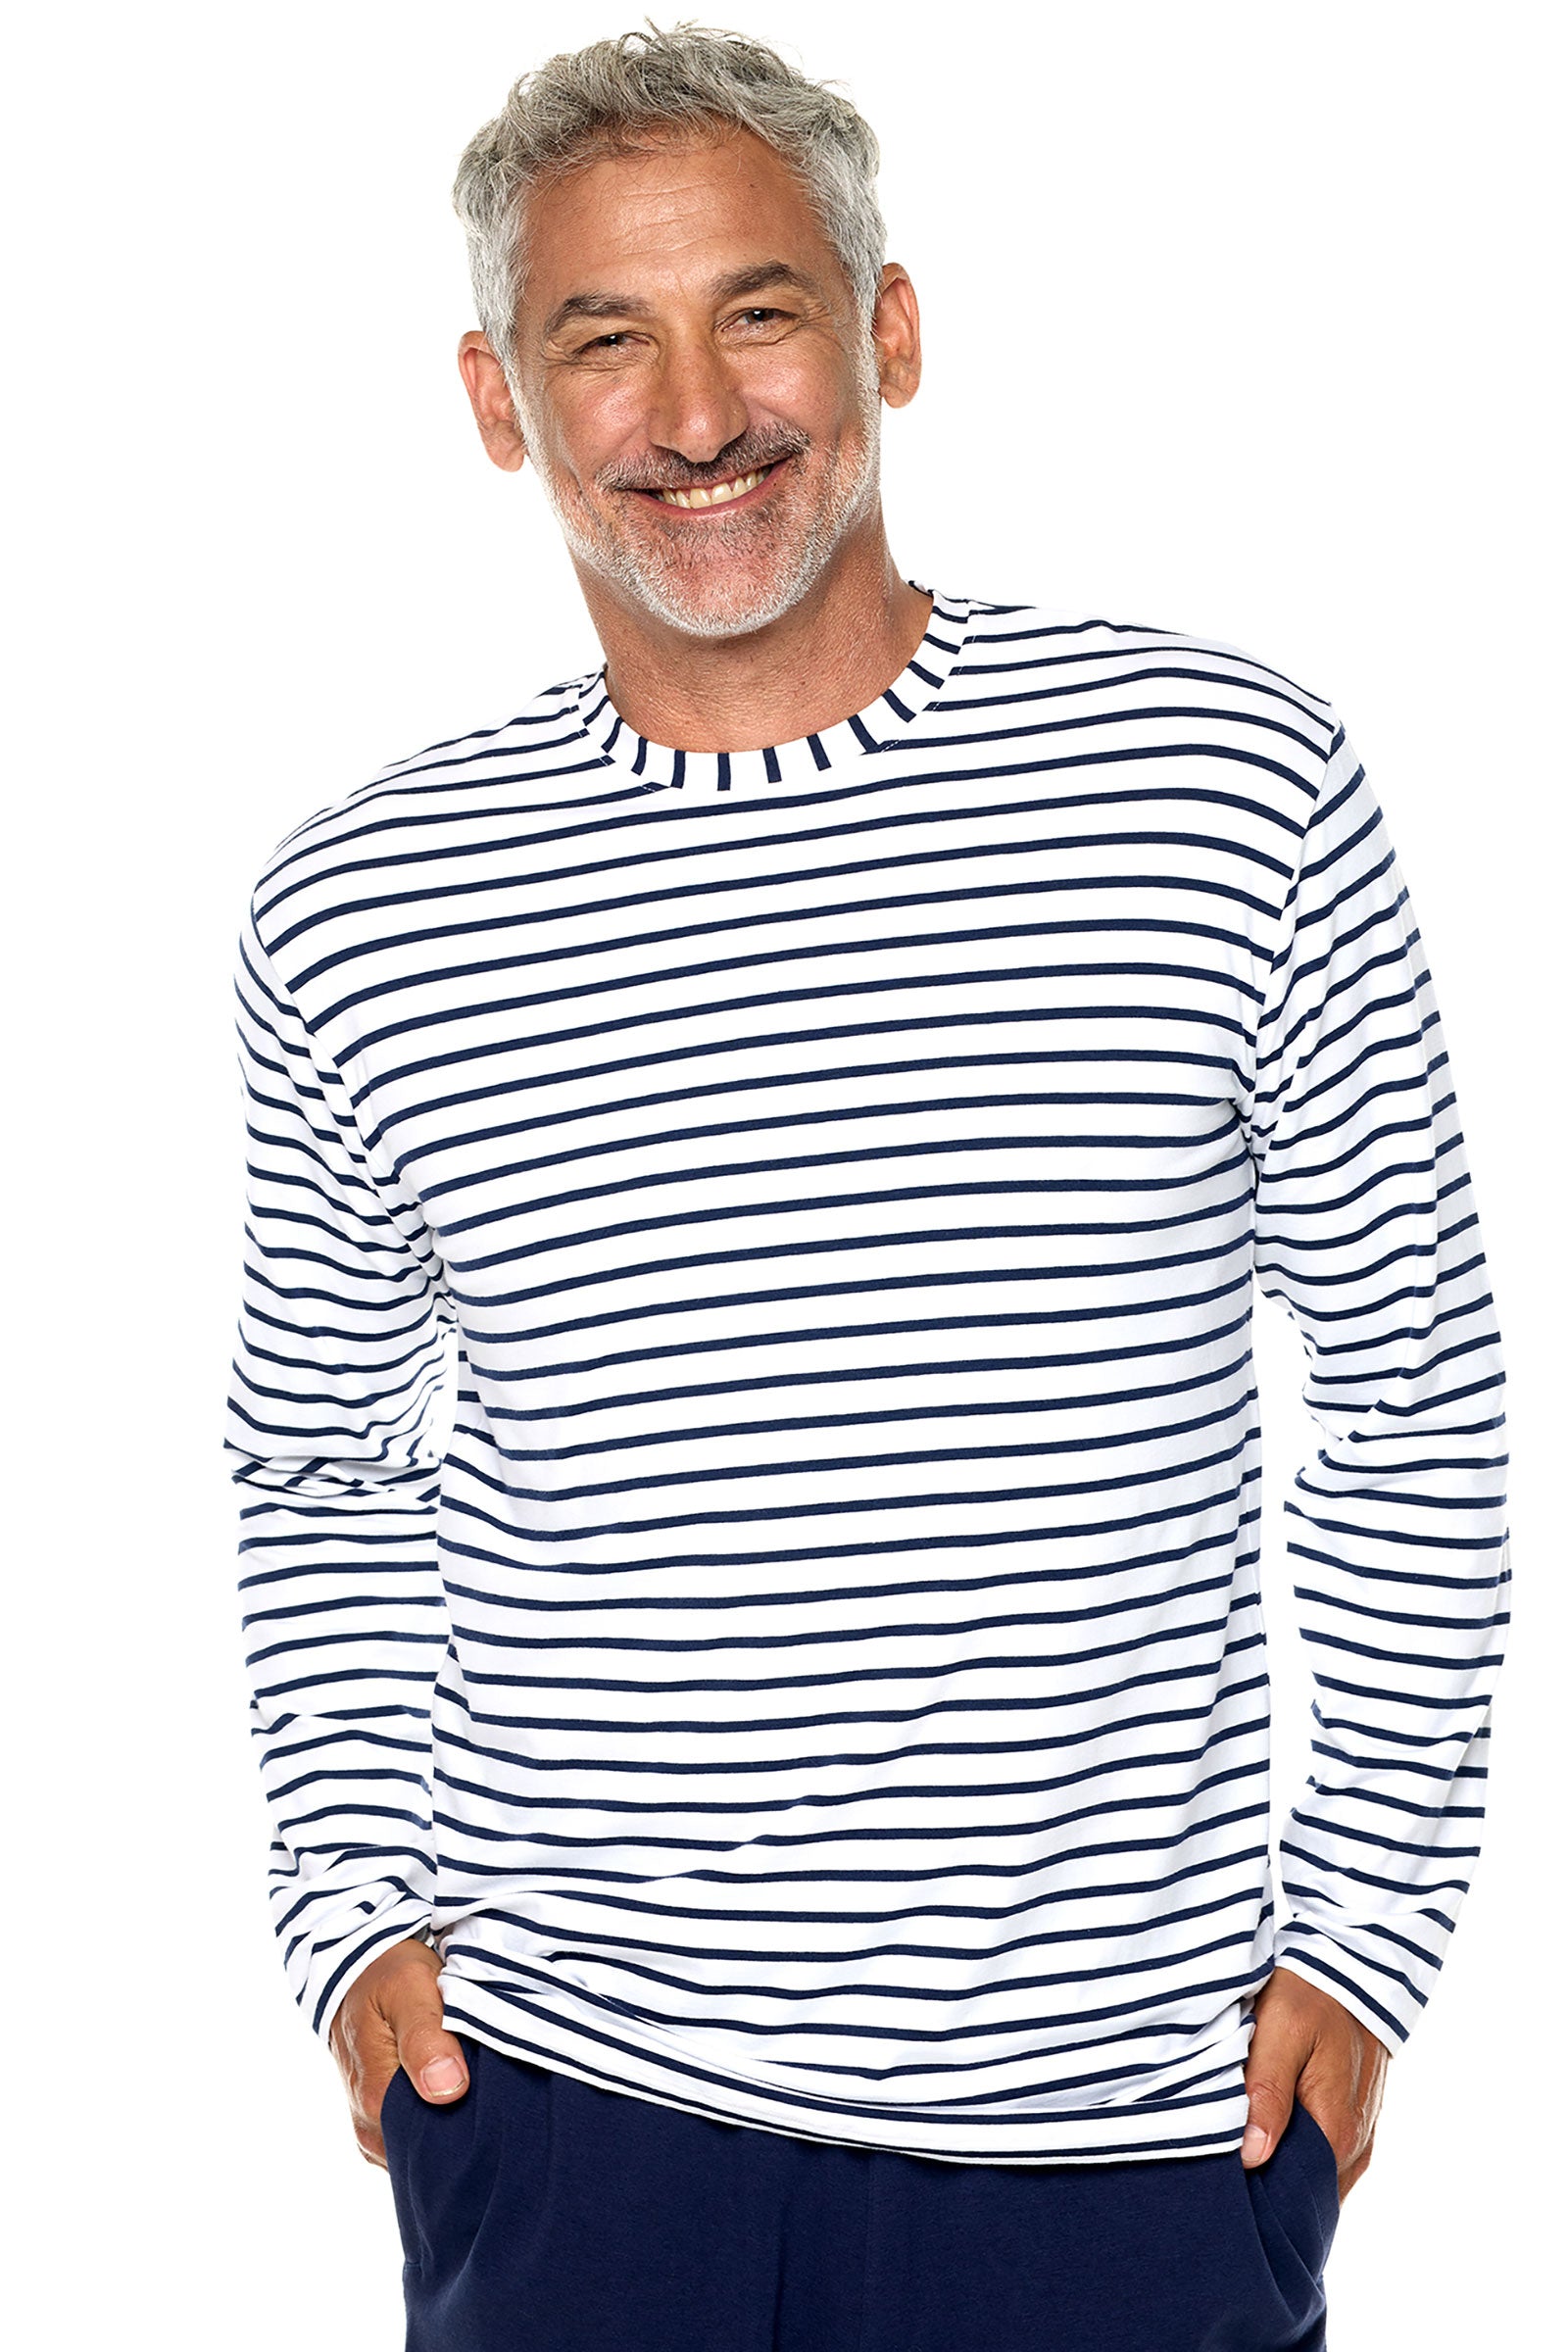 Shirts for Men Long Sleeve Shirt V Neck Blouses Printed Shirt Comfort Shirt  Soft Fitted Tees (Khaki, S) : : Fashion